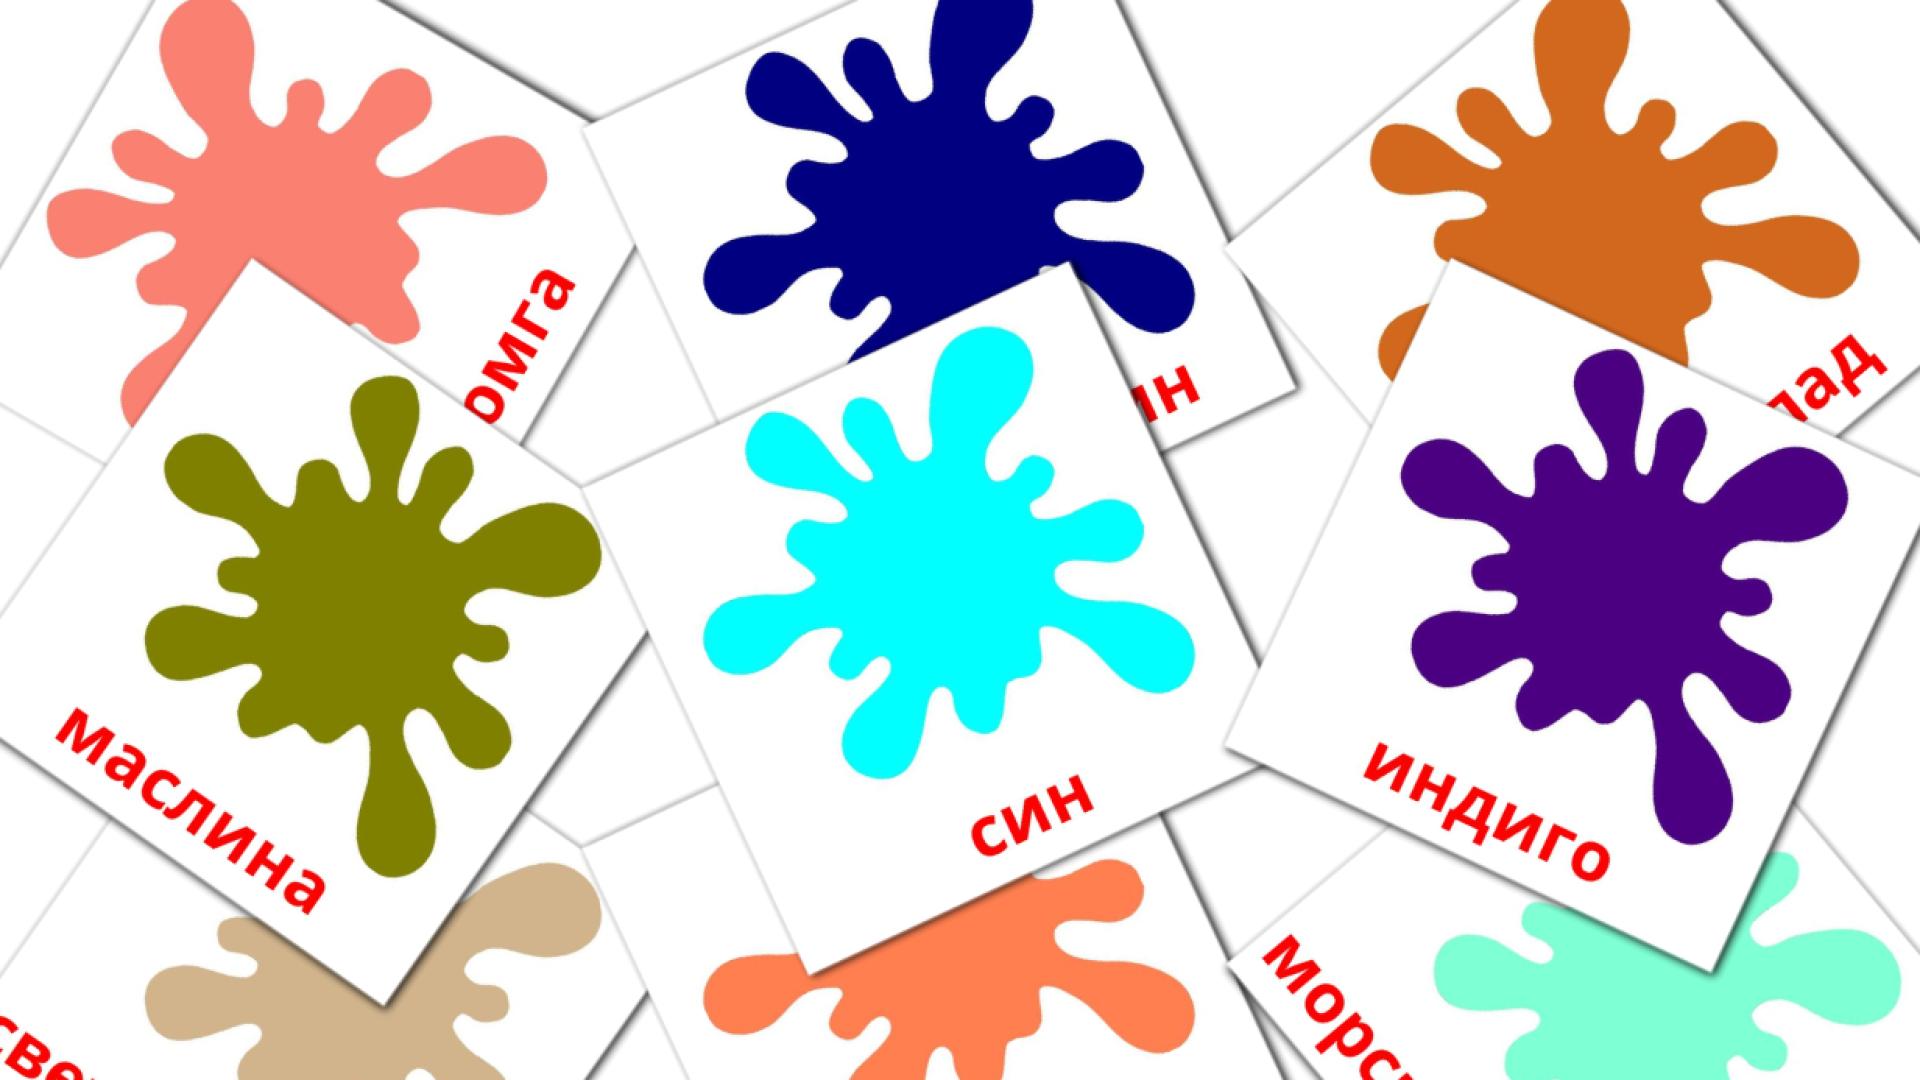 Secondary colors - bulgarian vocabulary cards